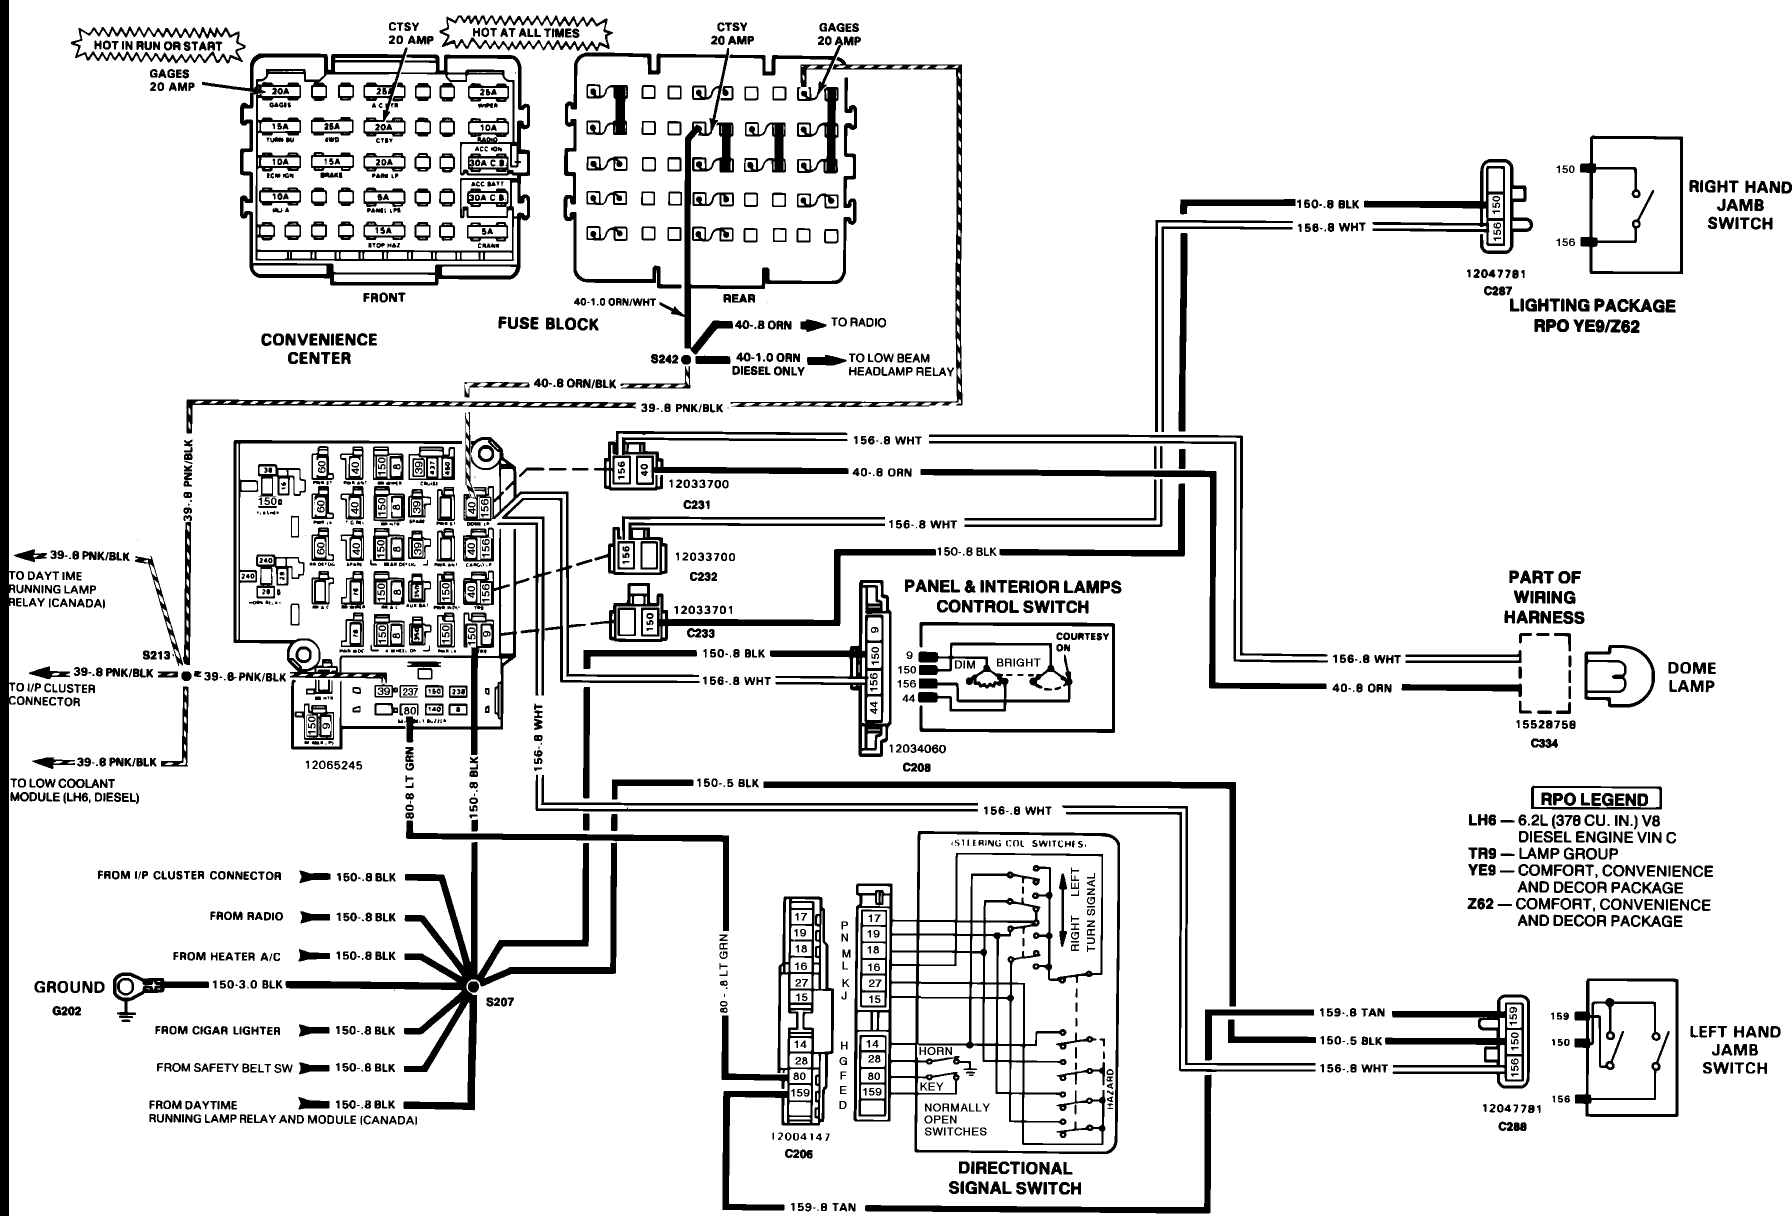 Wiring Diagram 1992 Gmc Sierra from motogurumag.com